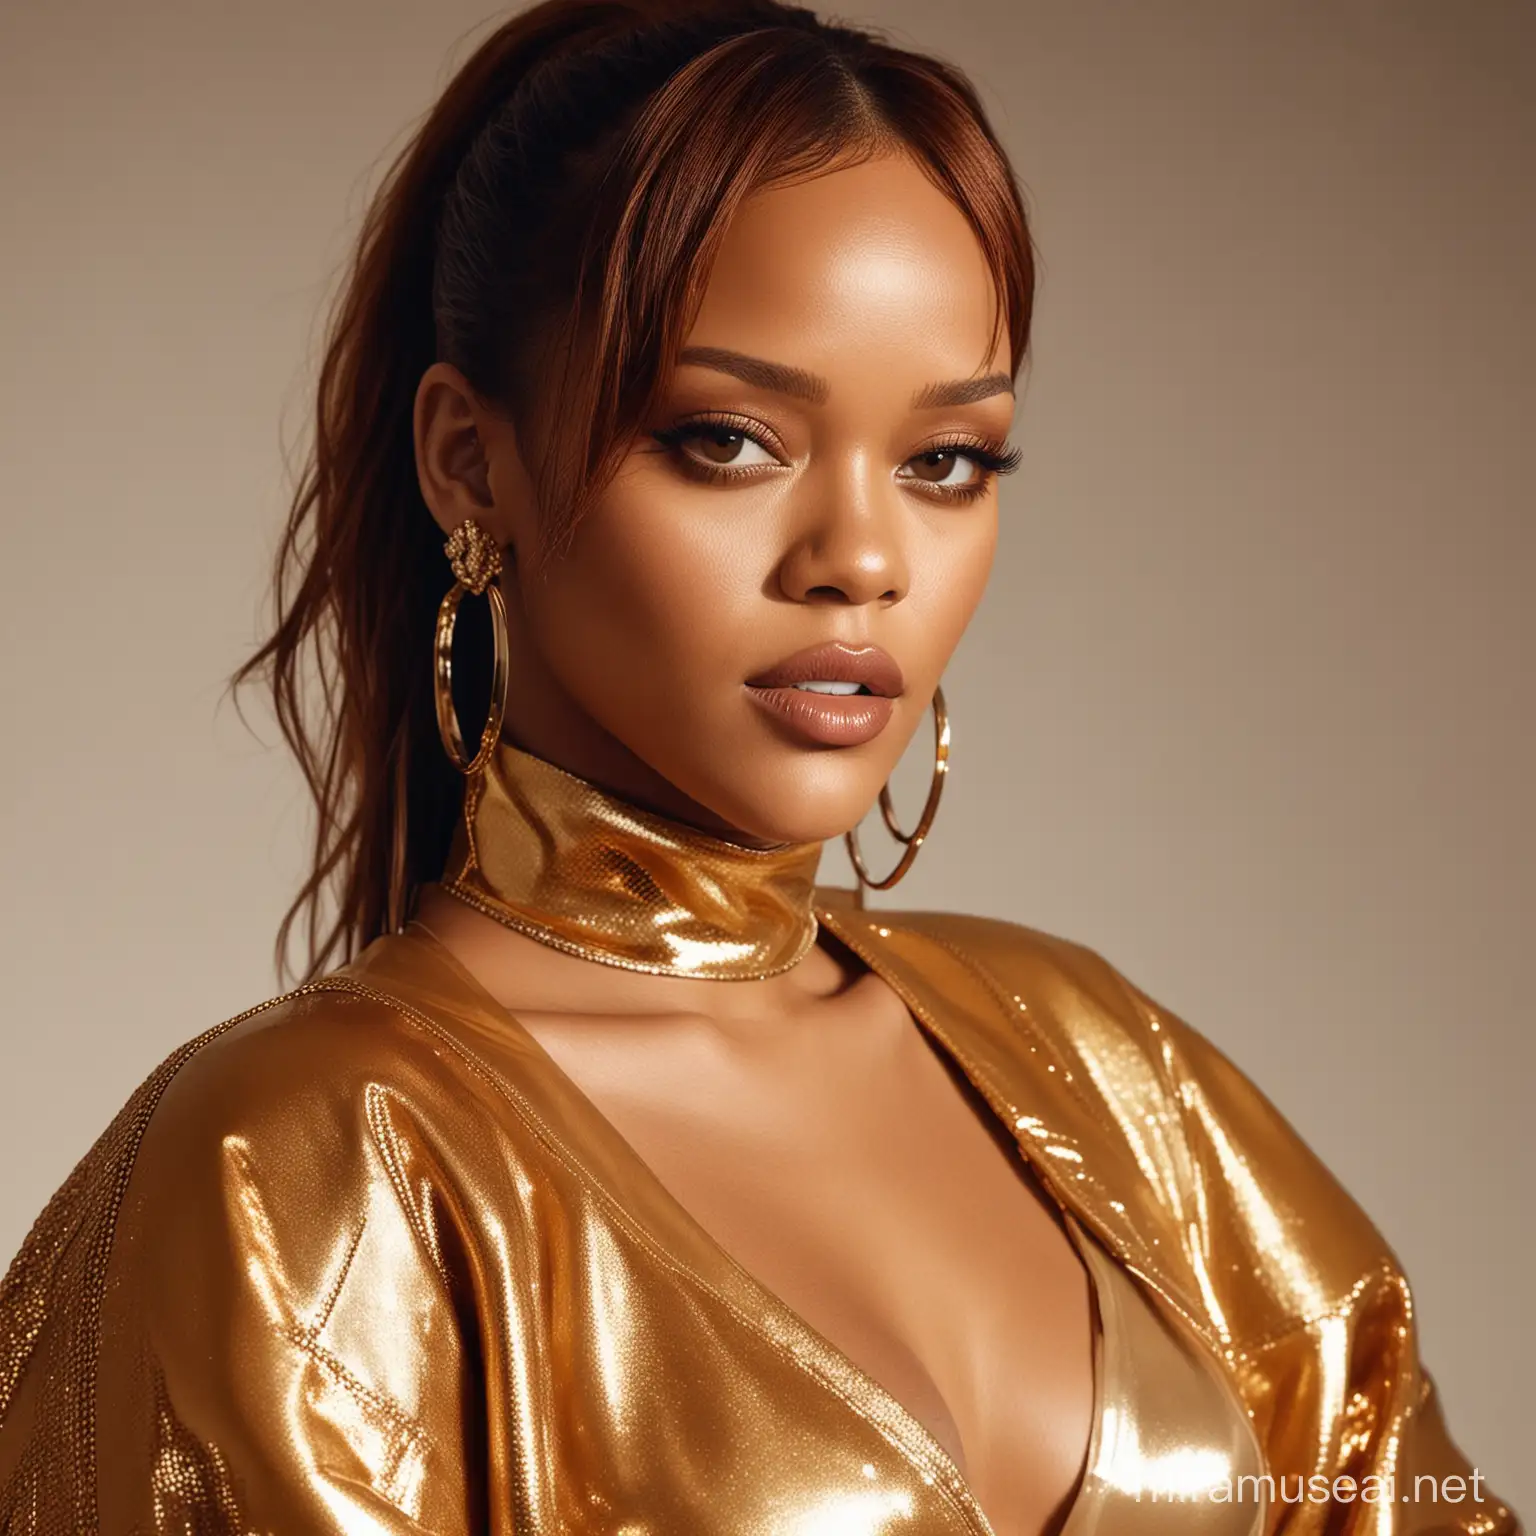 Rihanna Portrait in Trendy Designer Outfit Unique Appropriation Art